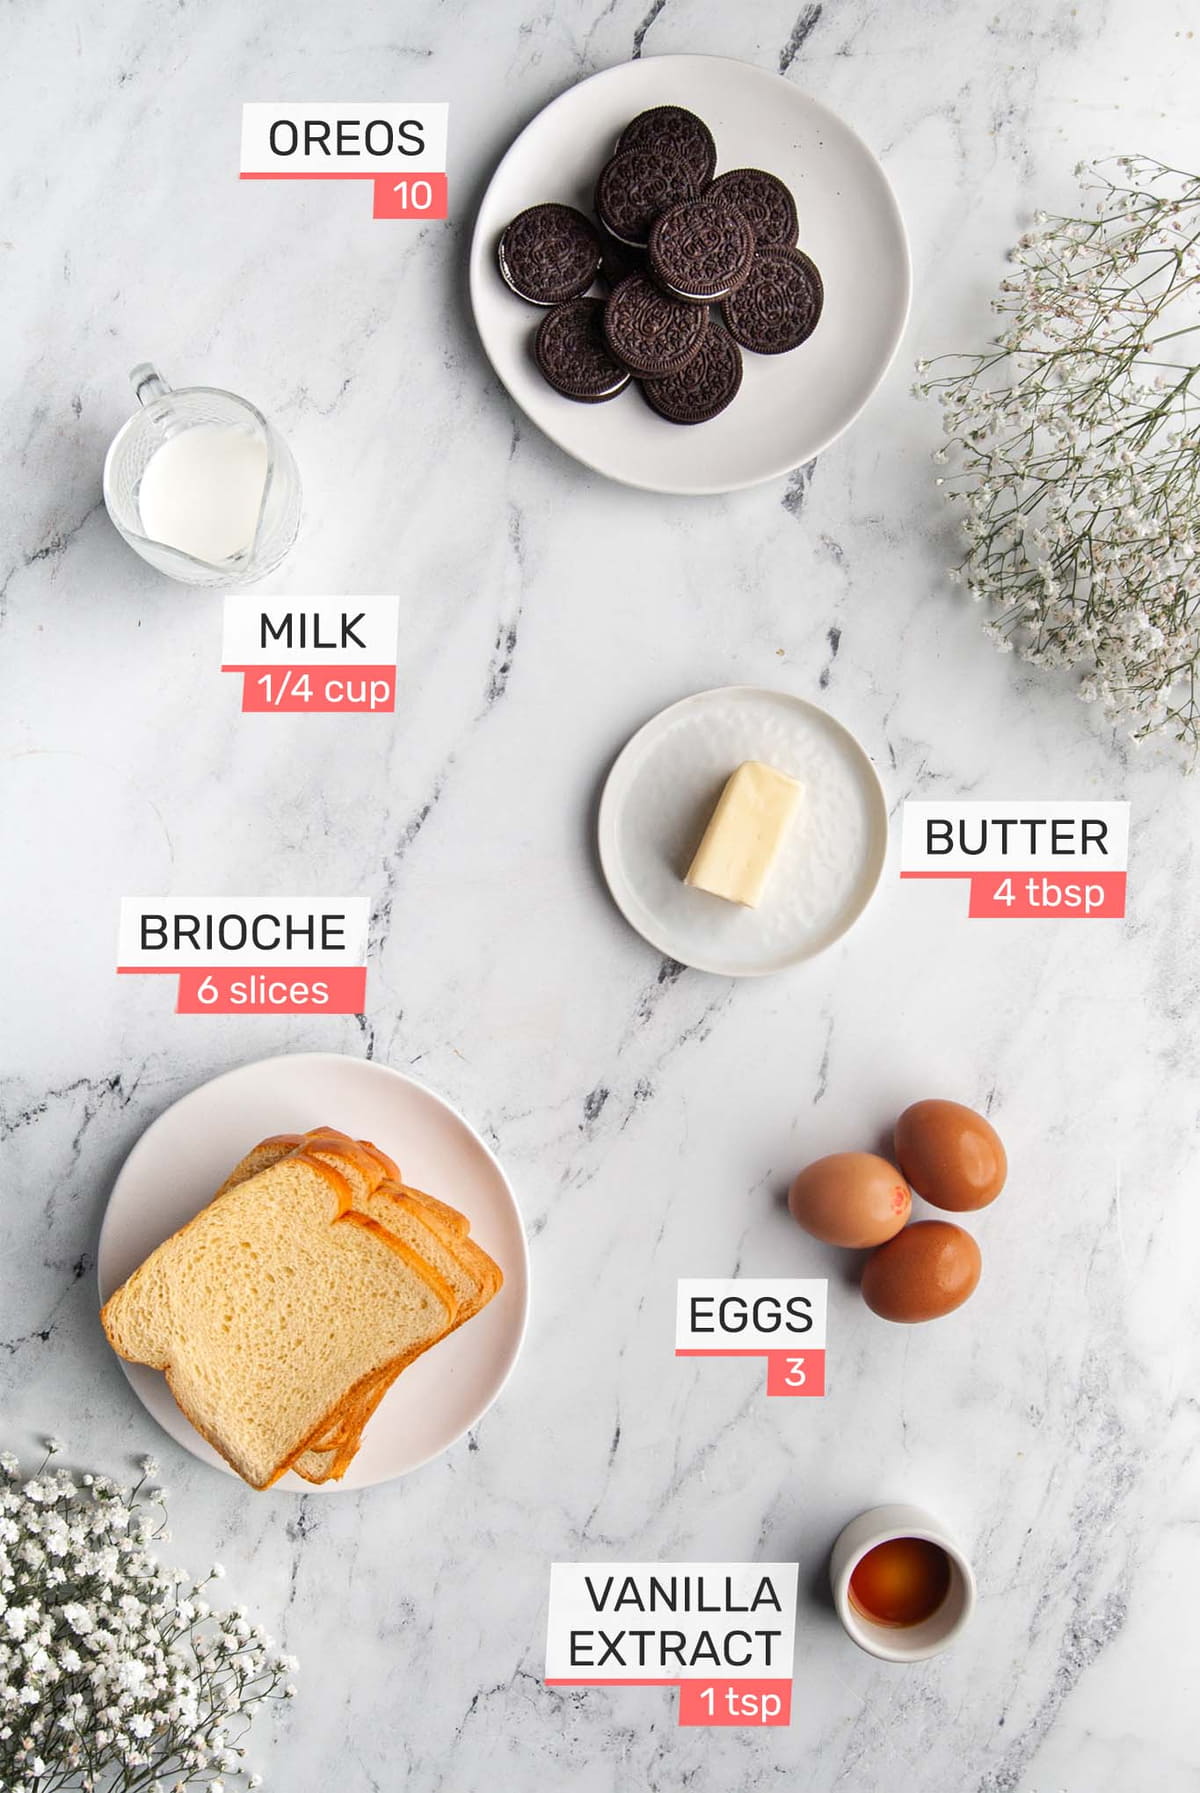 oreos, milk, unsalted butter, sliced brioche, eggs, and vanilla extract